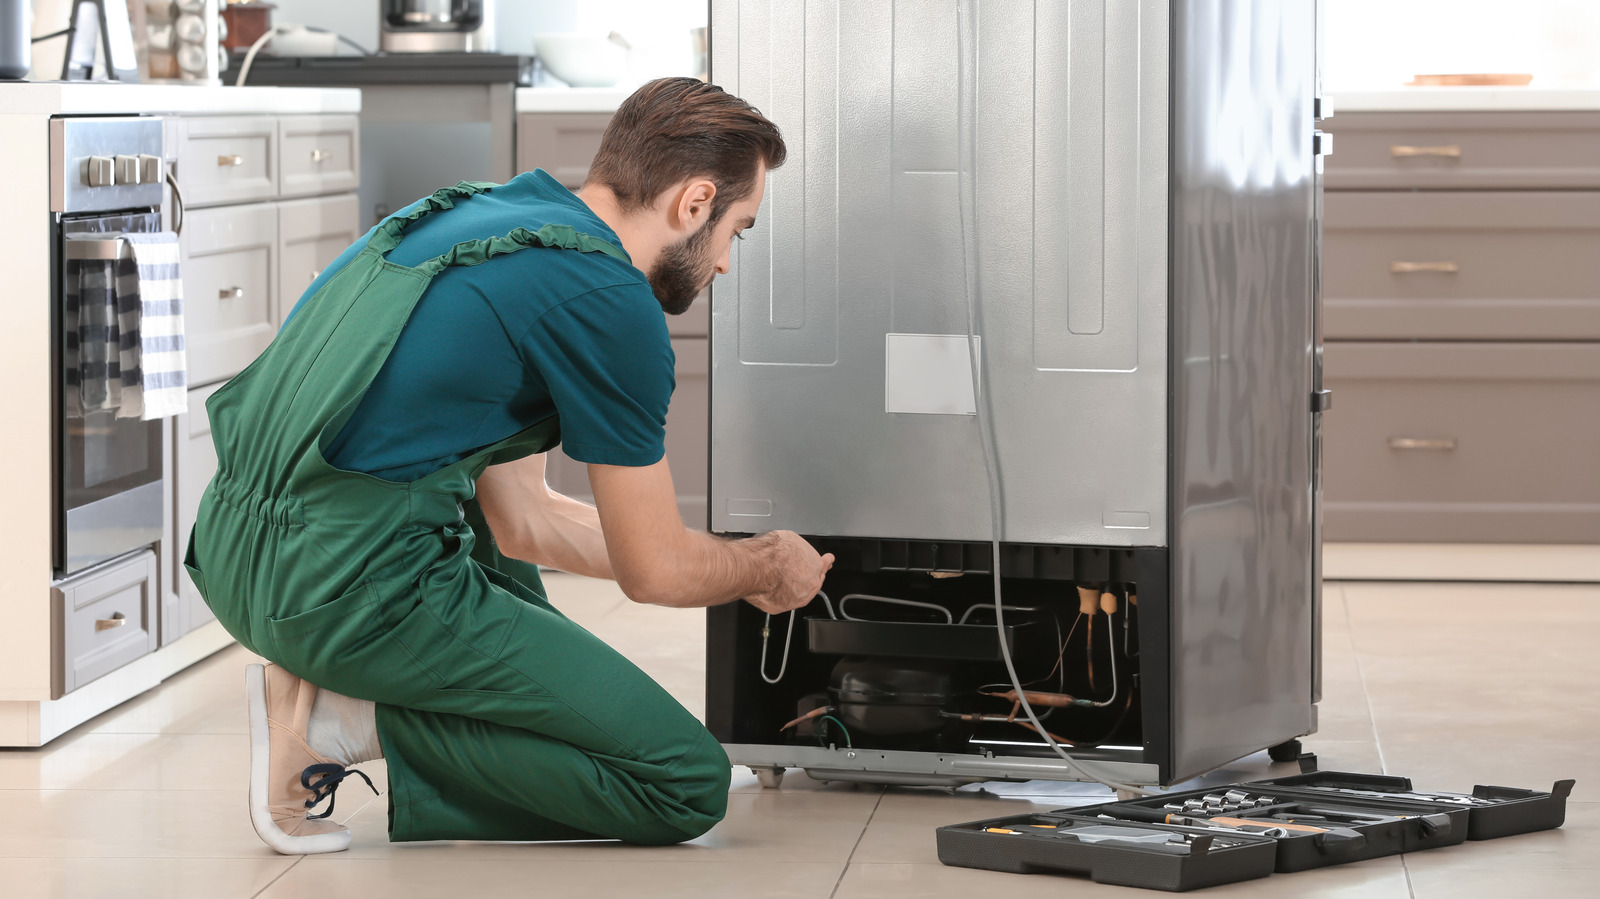 Dependable Refrigeration & Appliance Repair Service Fridge Repair Marana